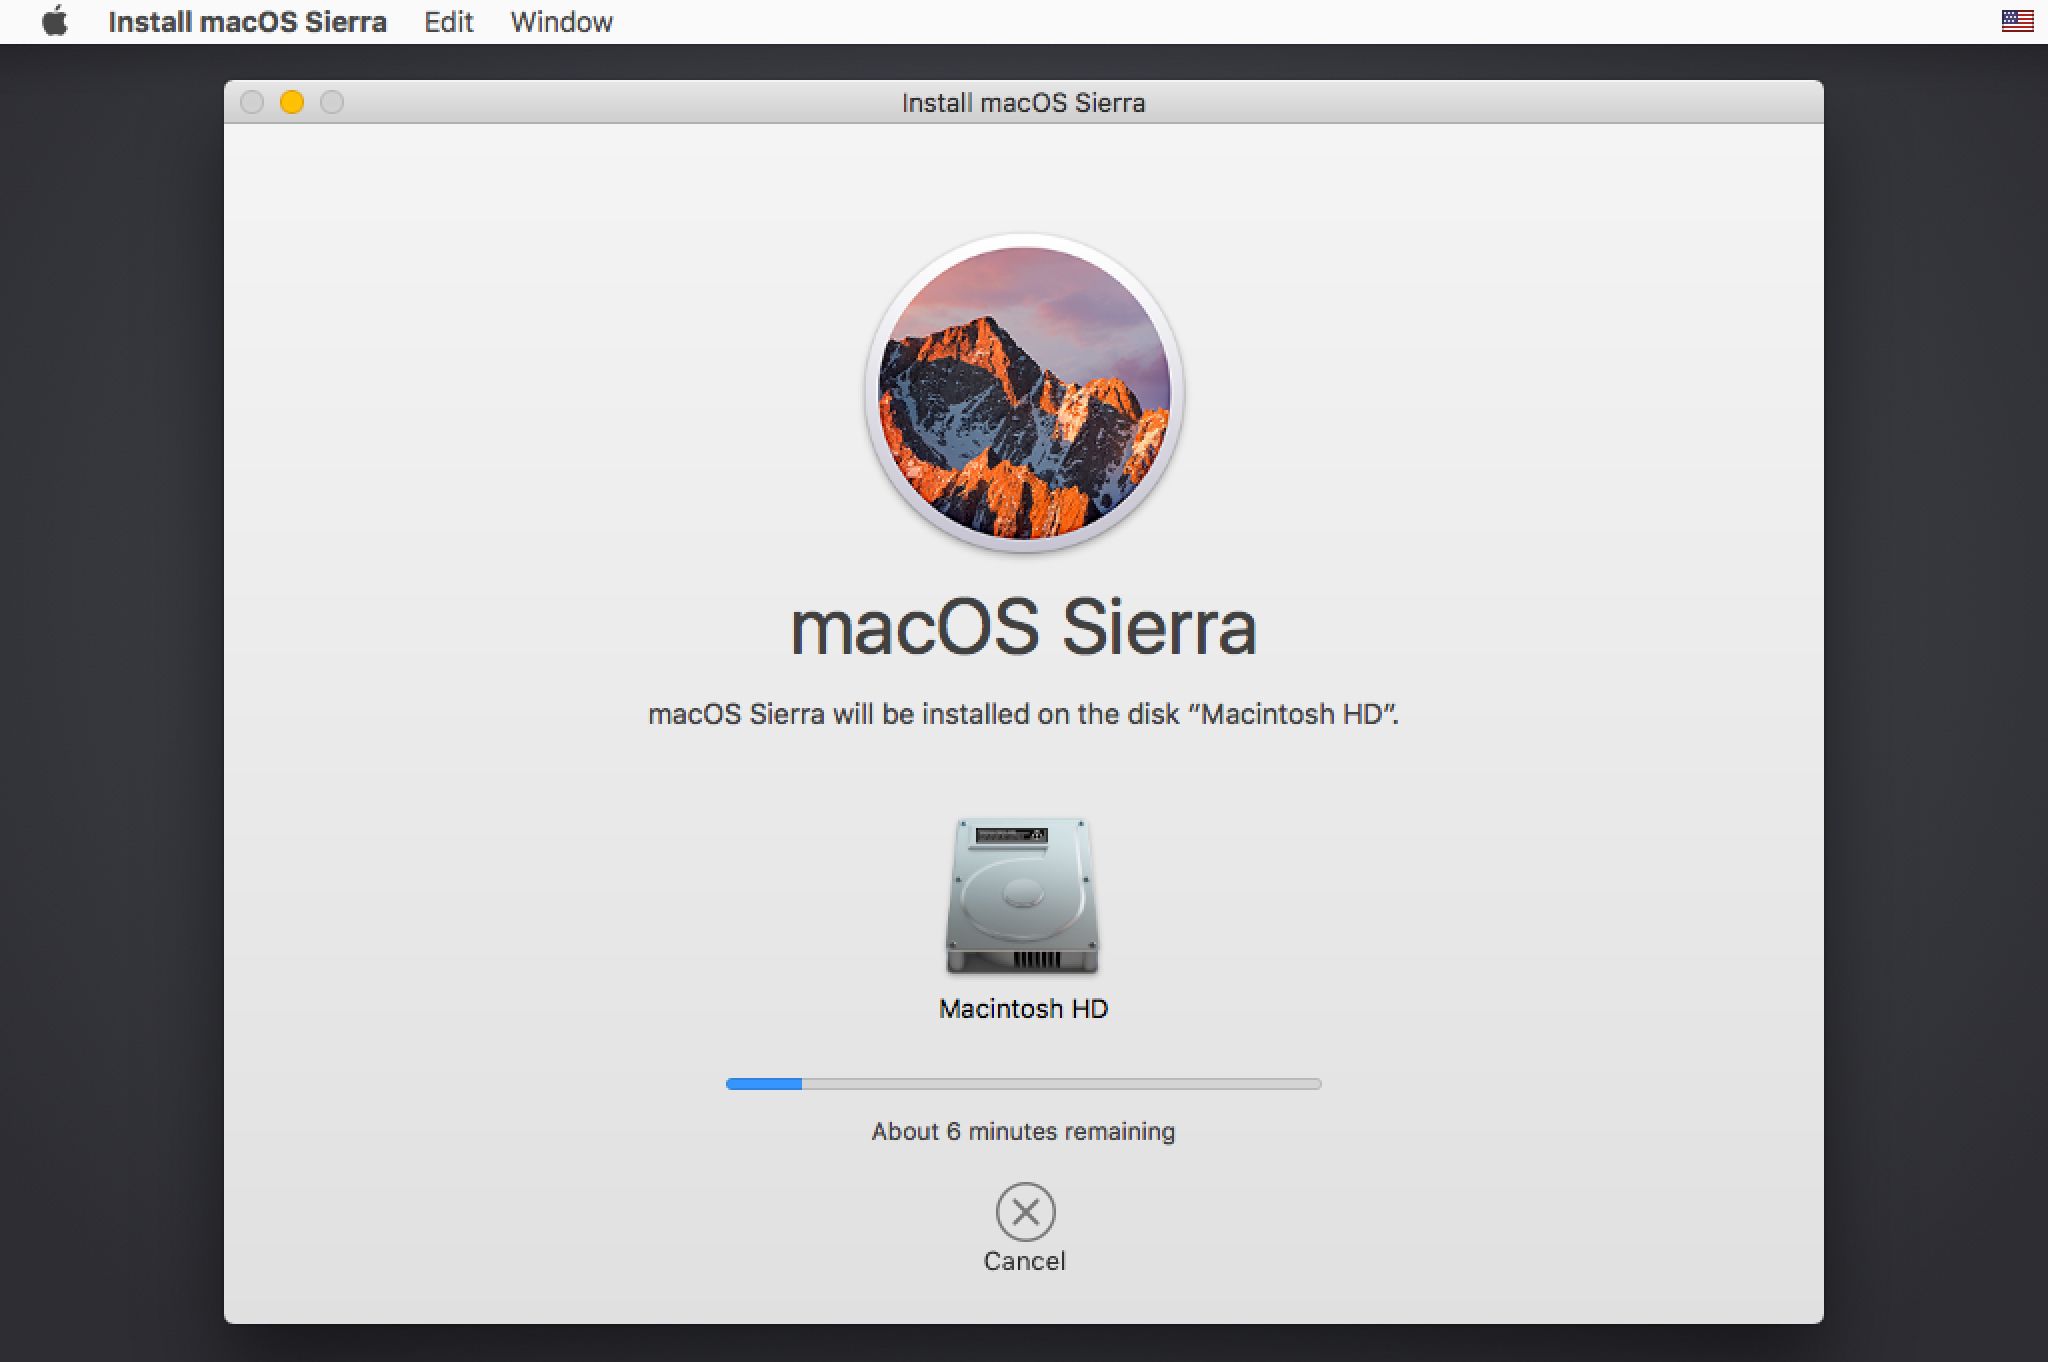 lišta procesu instalace macOS Sierra